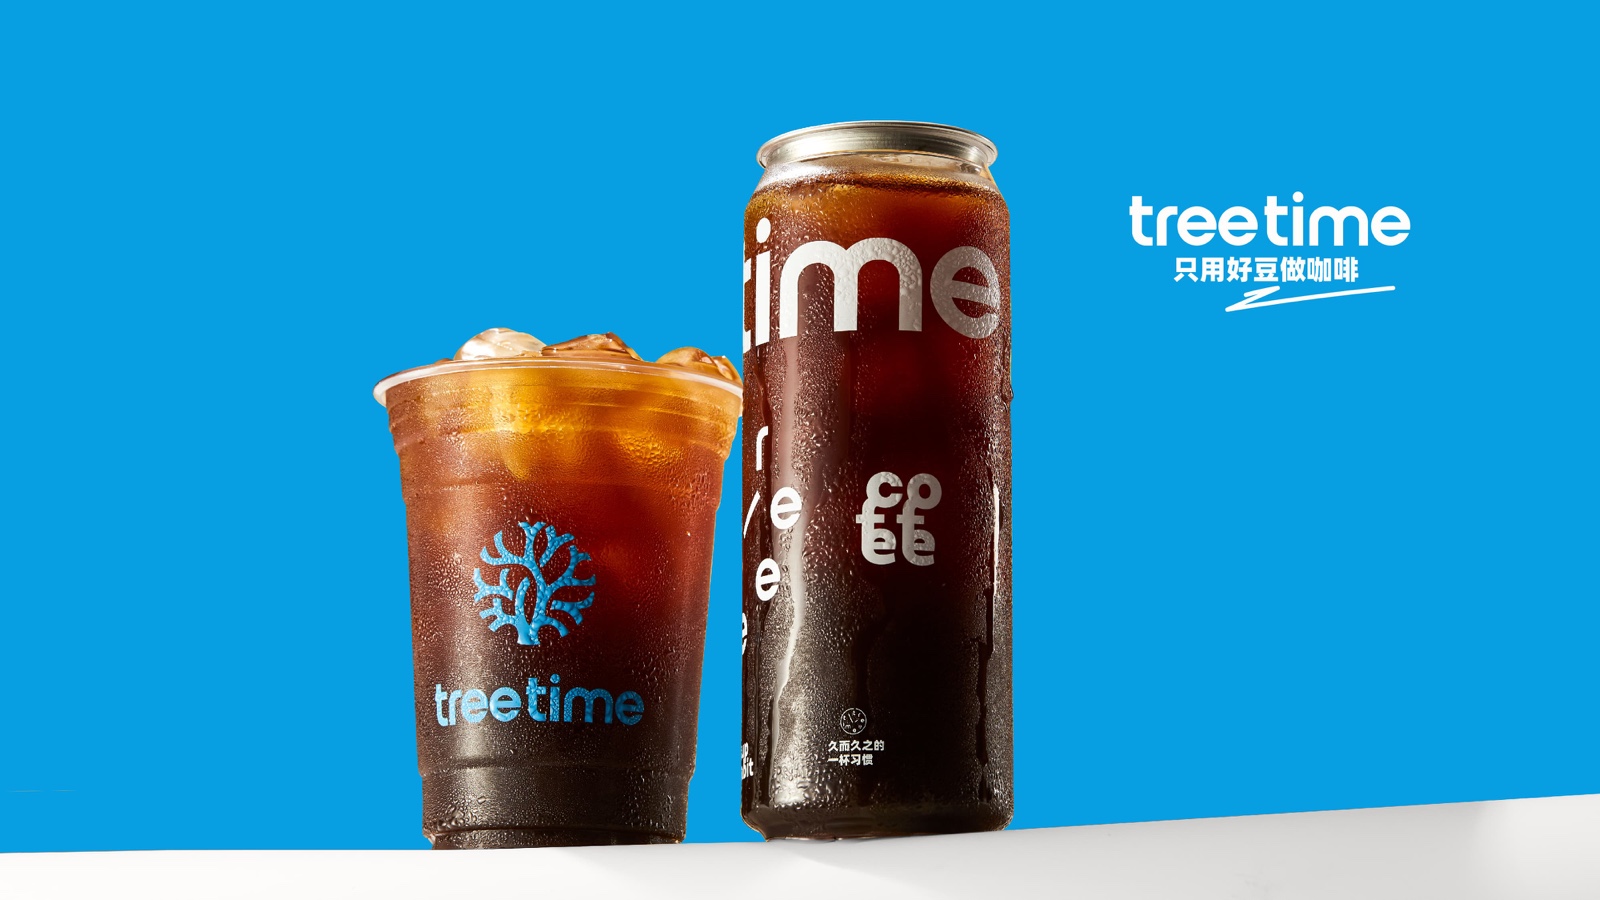 treetime coffee